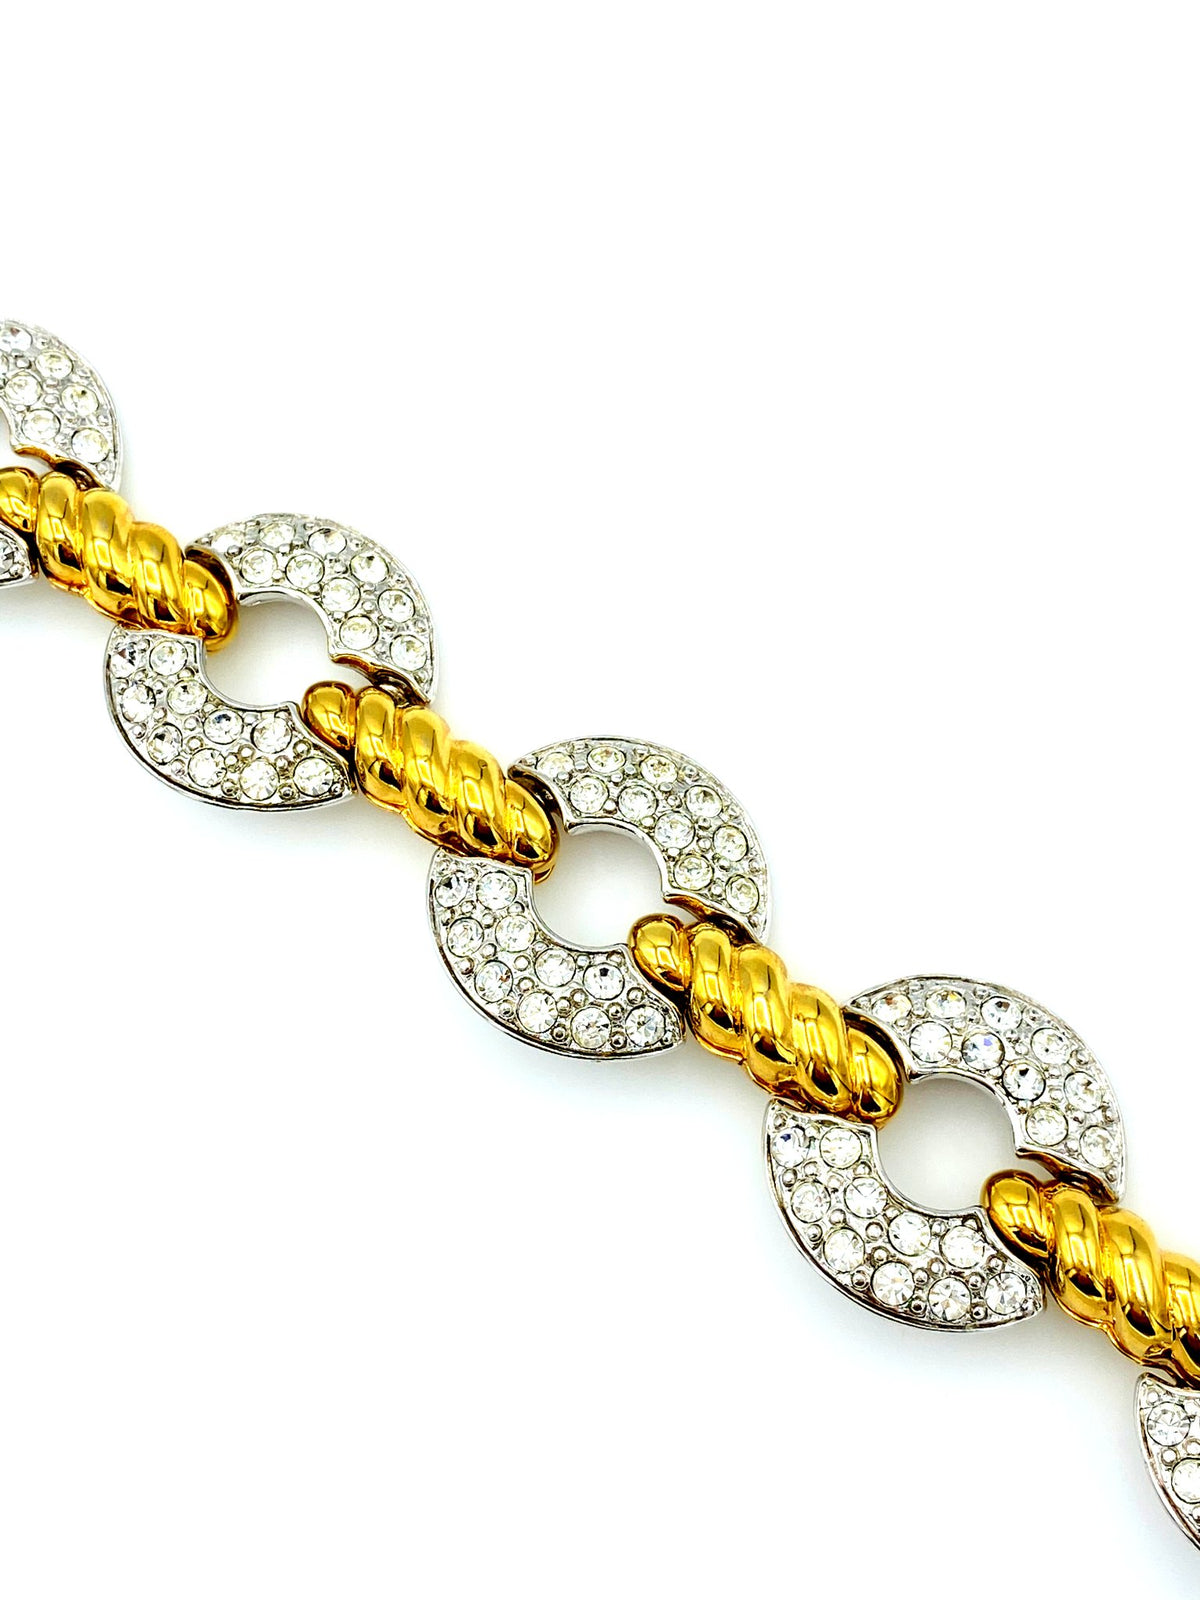 Nolan Miller Classic Gold & Silver Rhinestone Vintage Bracelet - 24 Wishes Vintage Jewelry